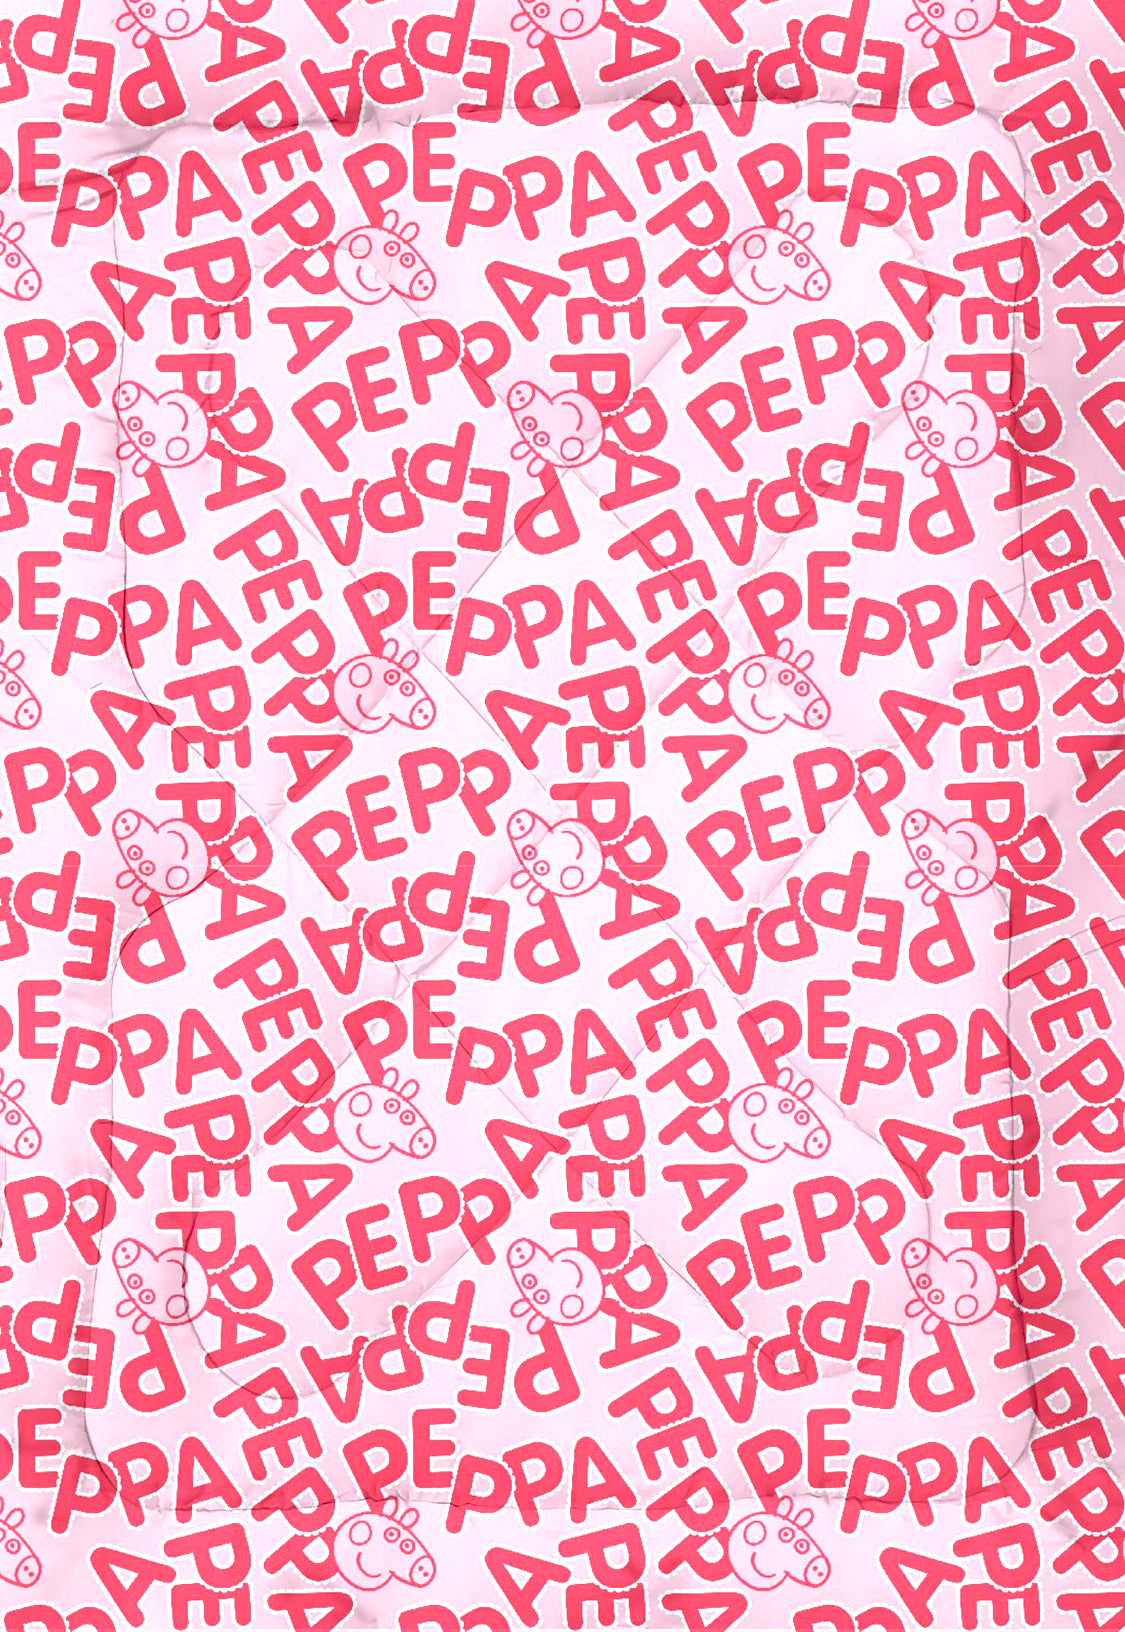 Peppa All Over Comforter